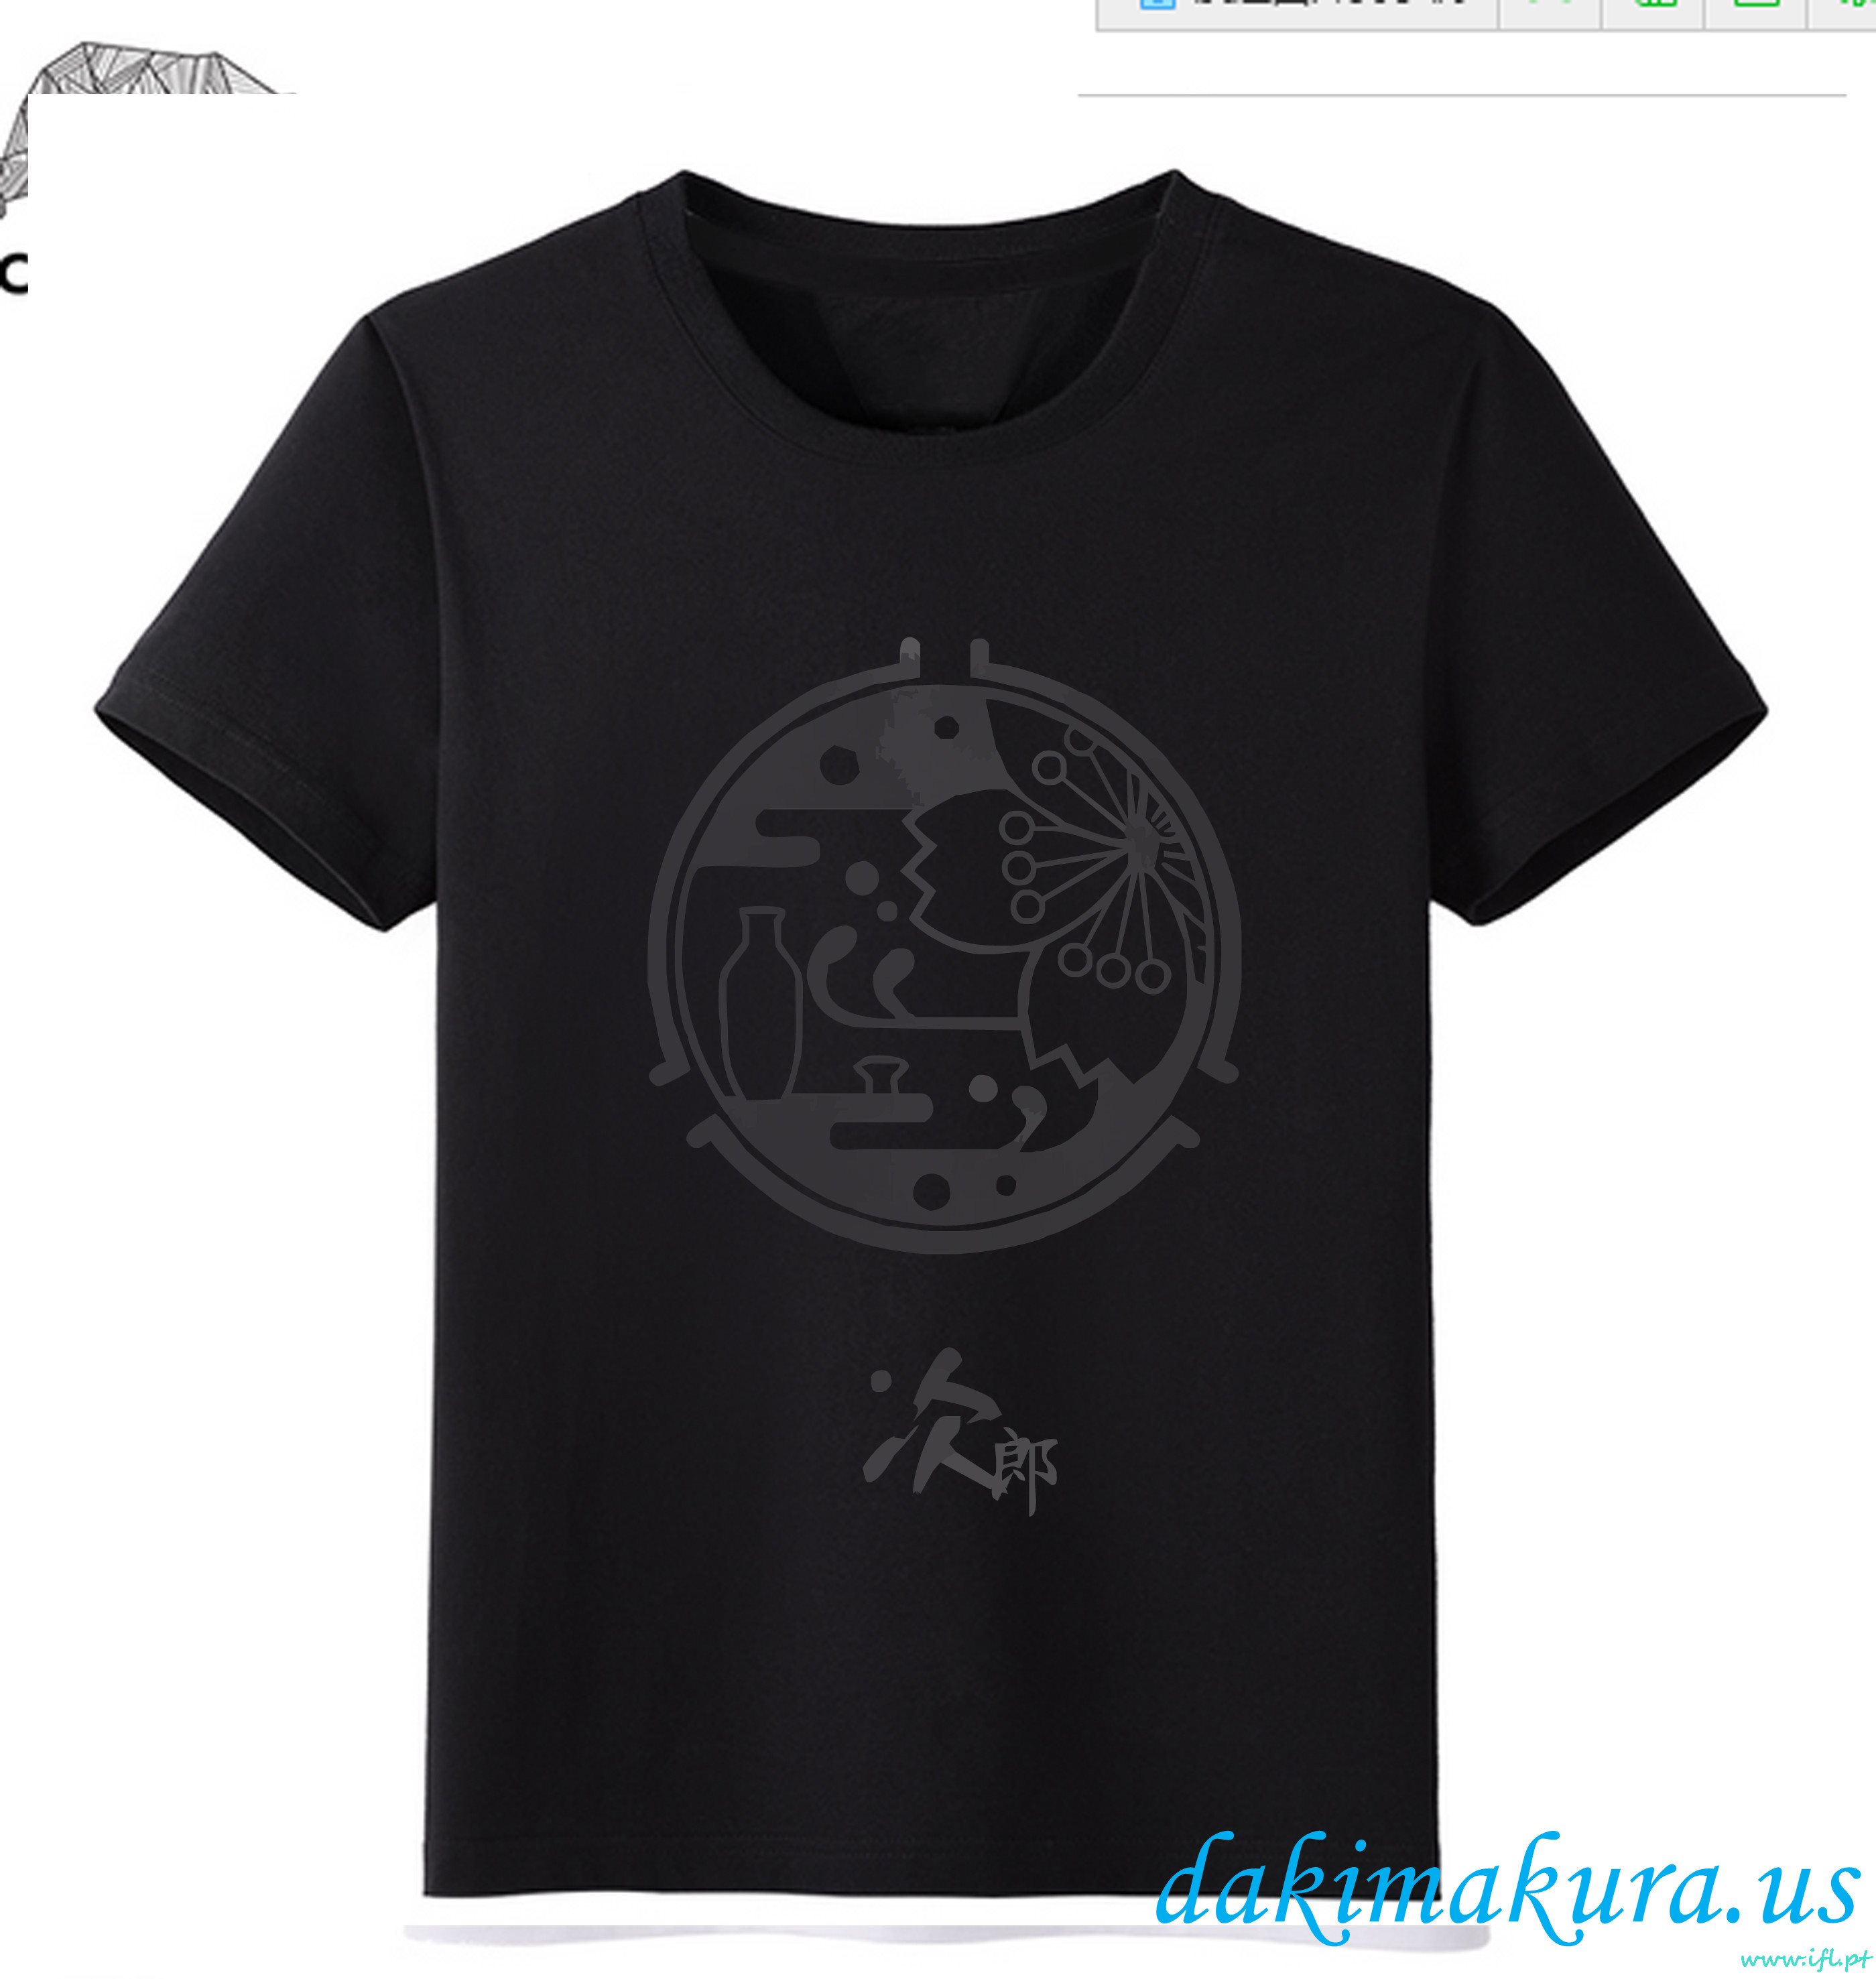 Billig Schwarz - Touken Ranbu Online Männer Anime Mode T-Shirts Aus China-Fabrik